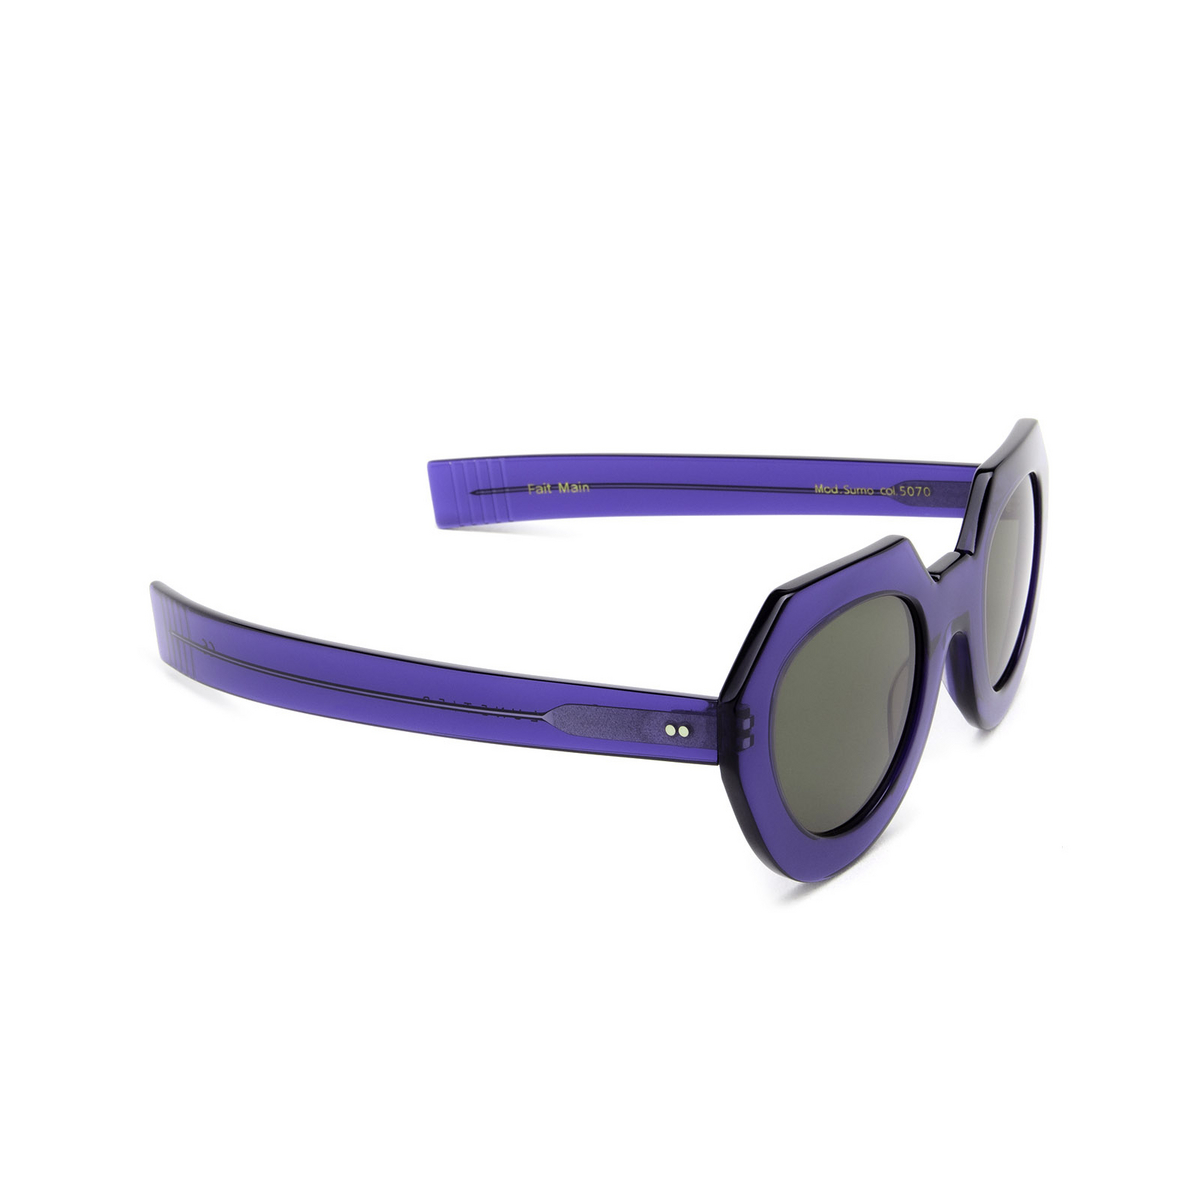 Lesca® Irregular Sunglasses: Sumo color Blue 5070 - three-quarters view.